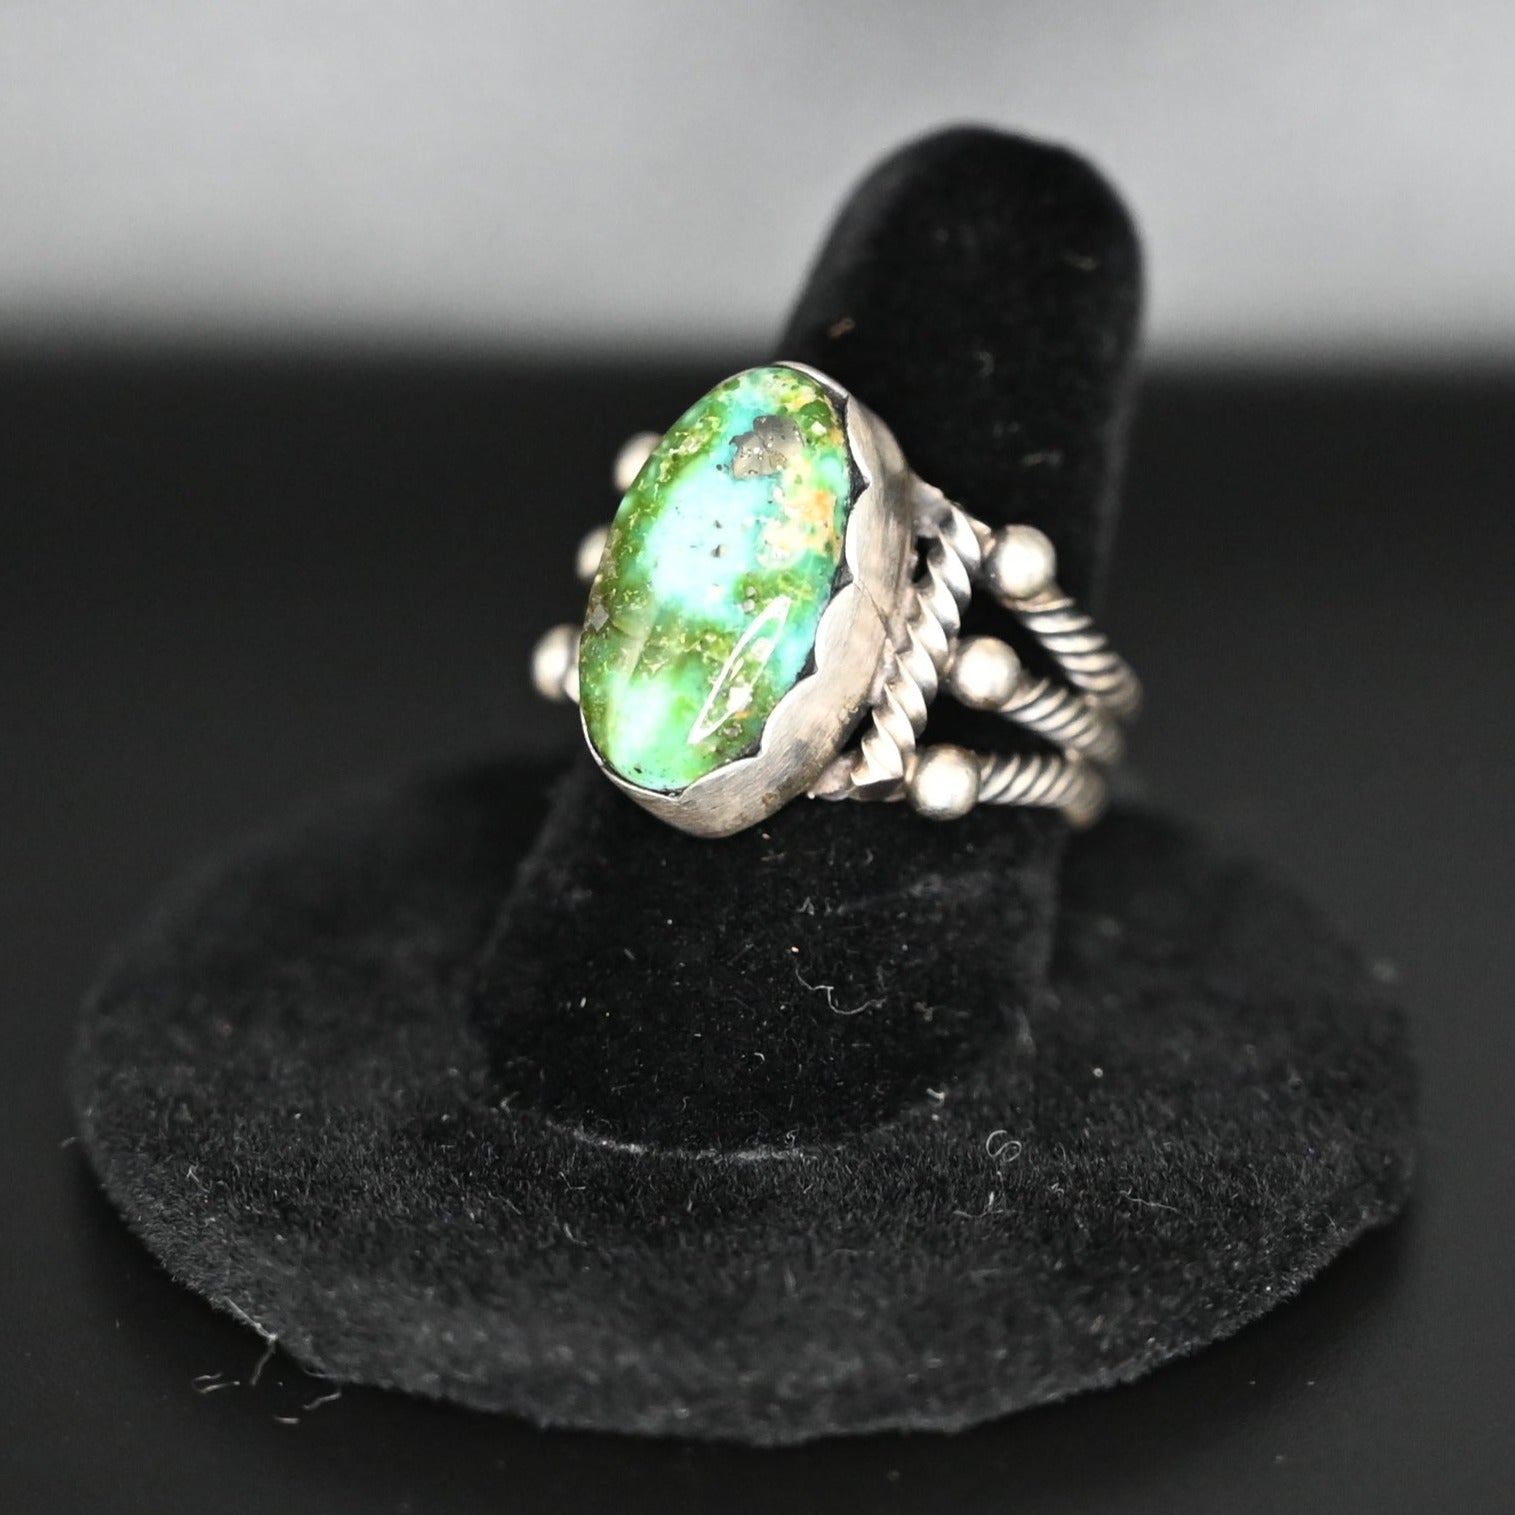 MINI ATOMIC LOVE : Atom Inspired Ring, Black Diamond Ring, Sciene Themed  Engagement Ring or Wedding Band. - Etsy